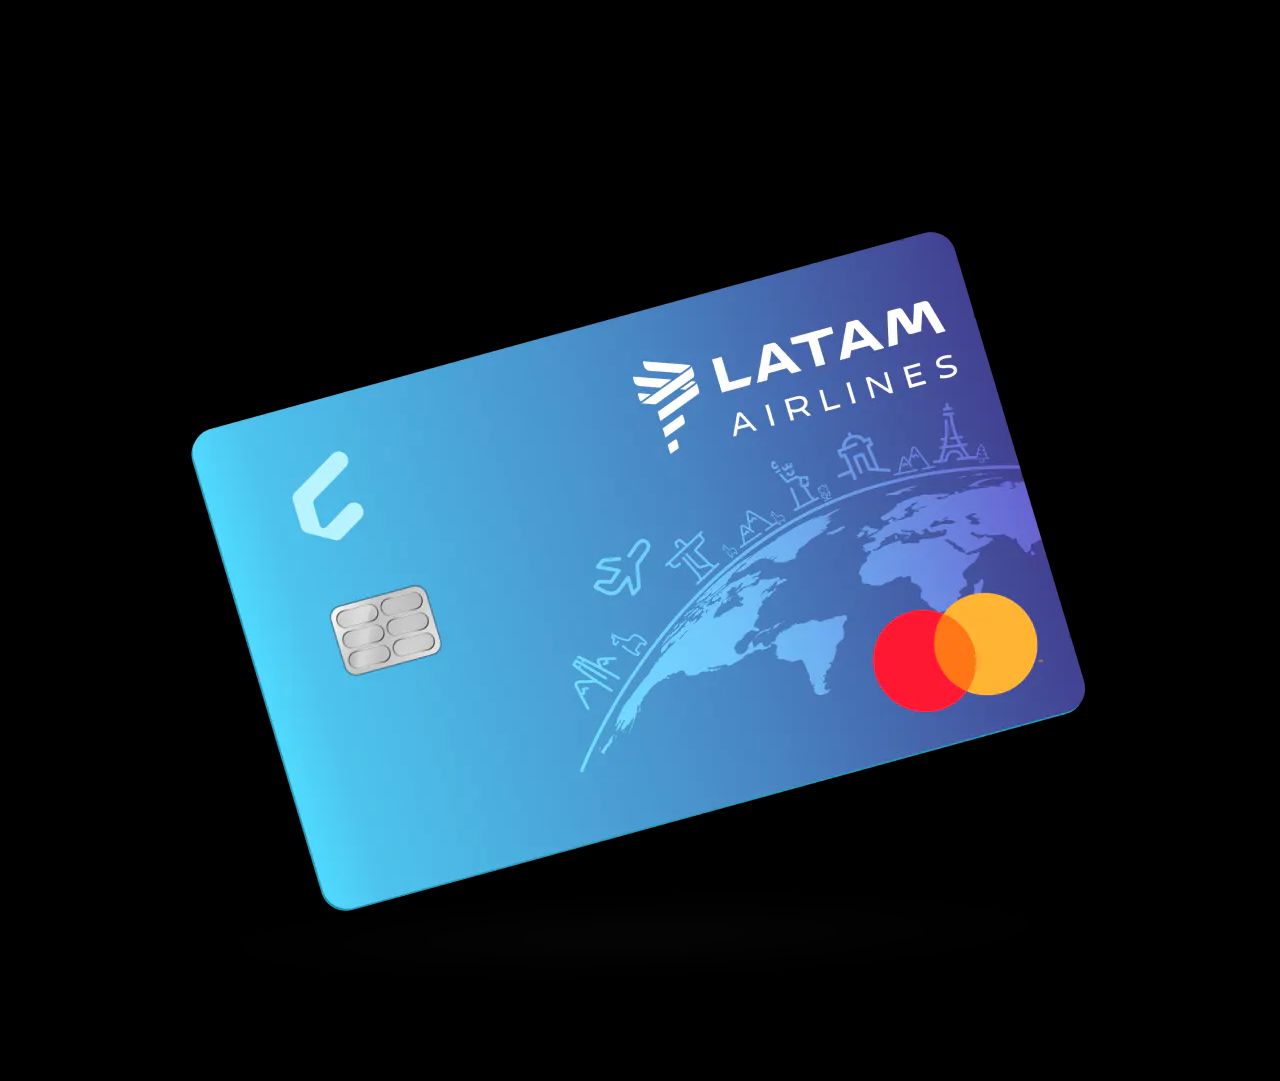 LATAM Airlines Mastercard